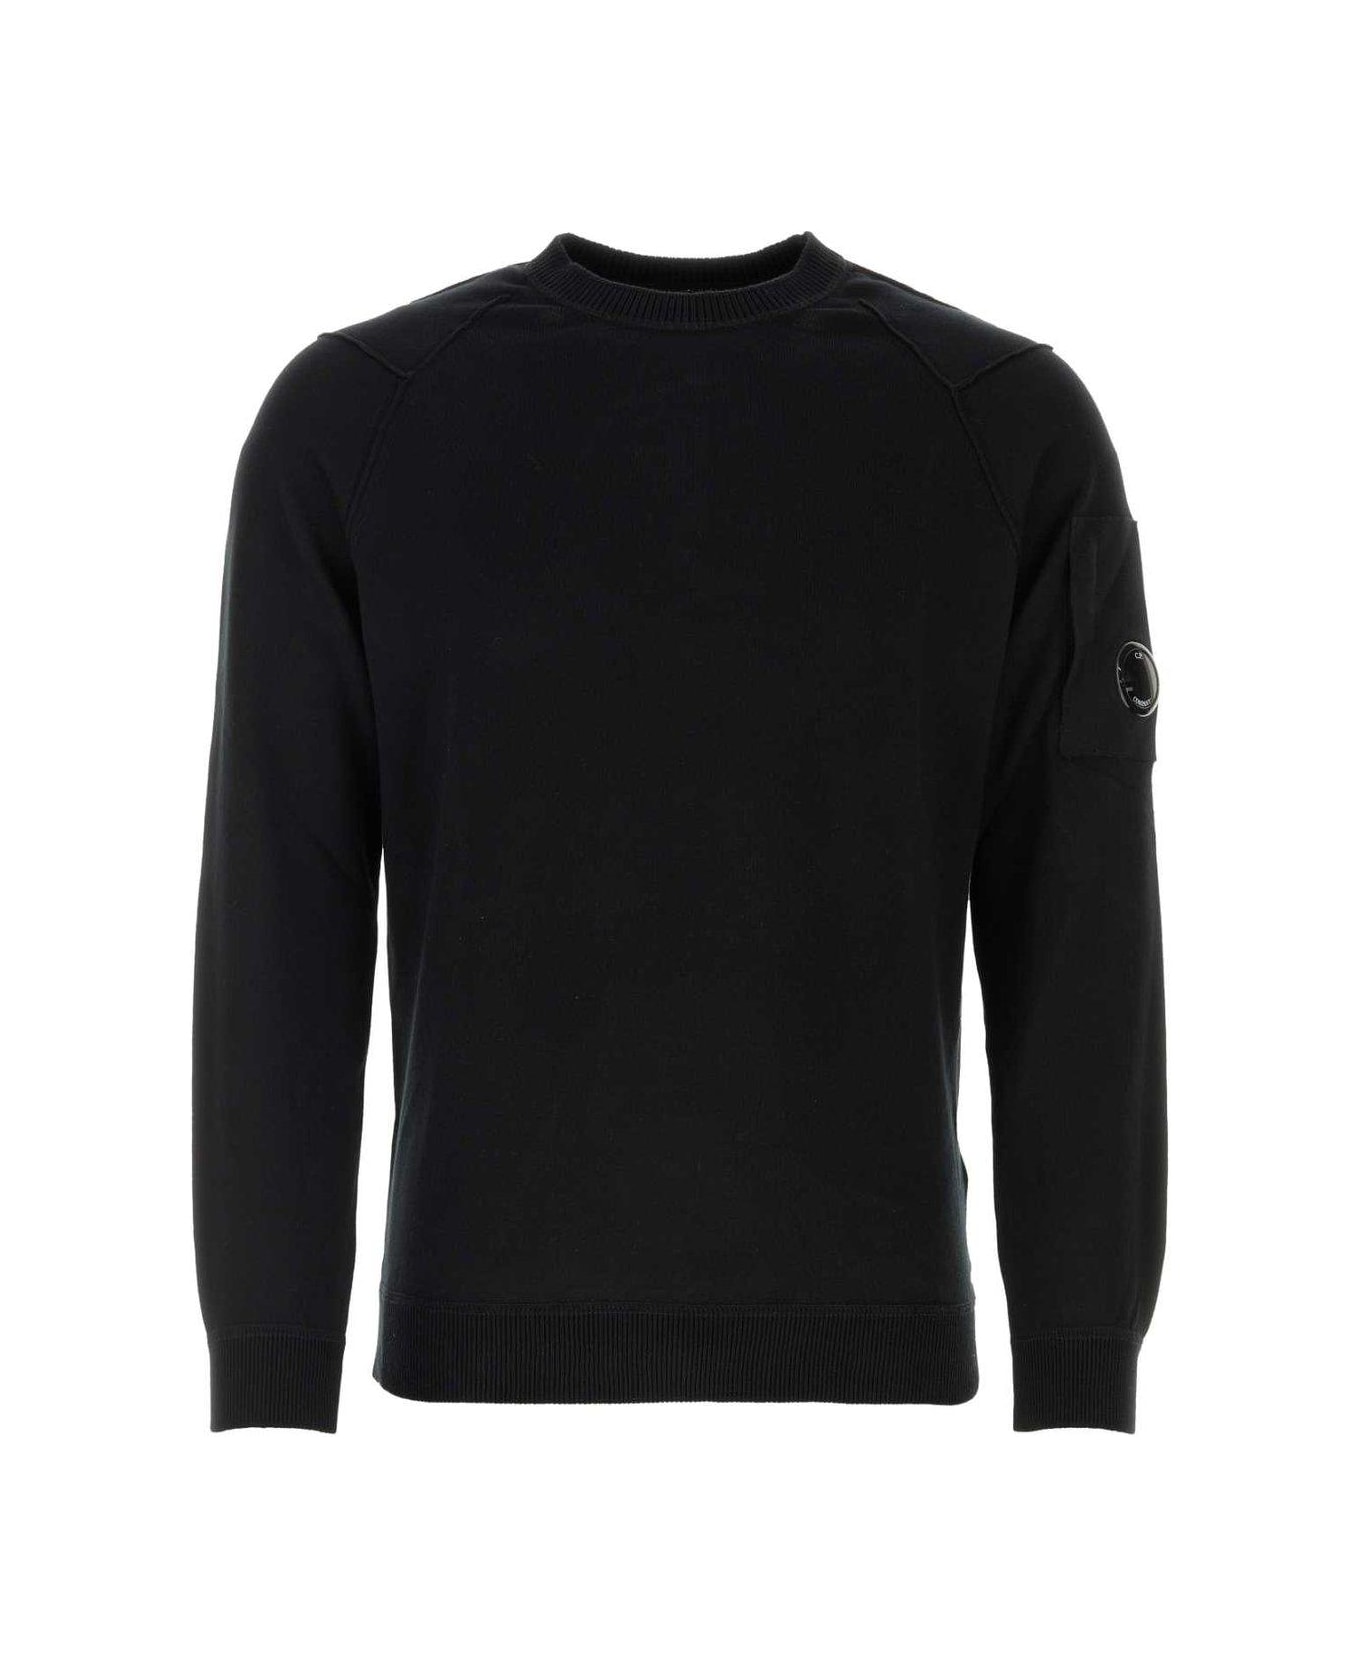 C.P. Company Len-detailed Sleeved Sweater - Black